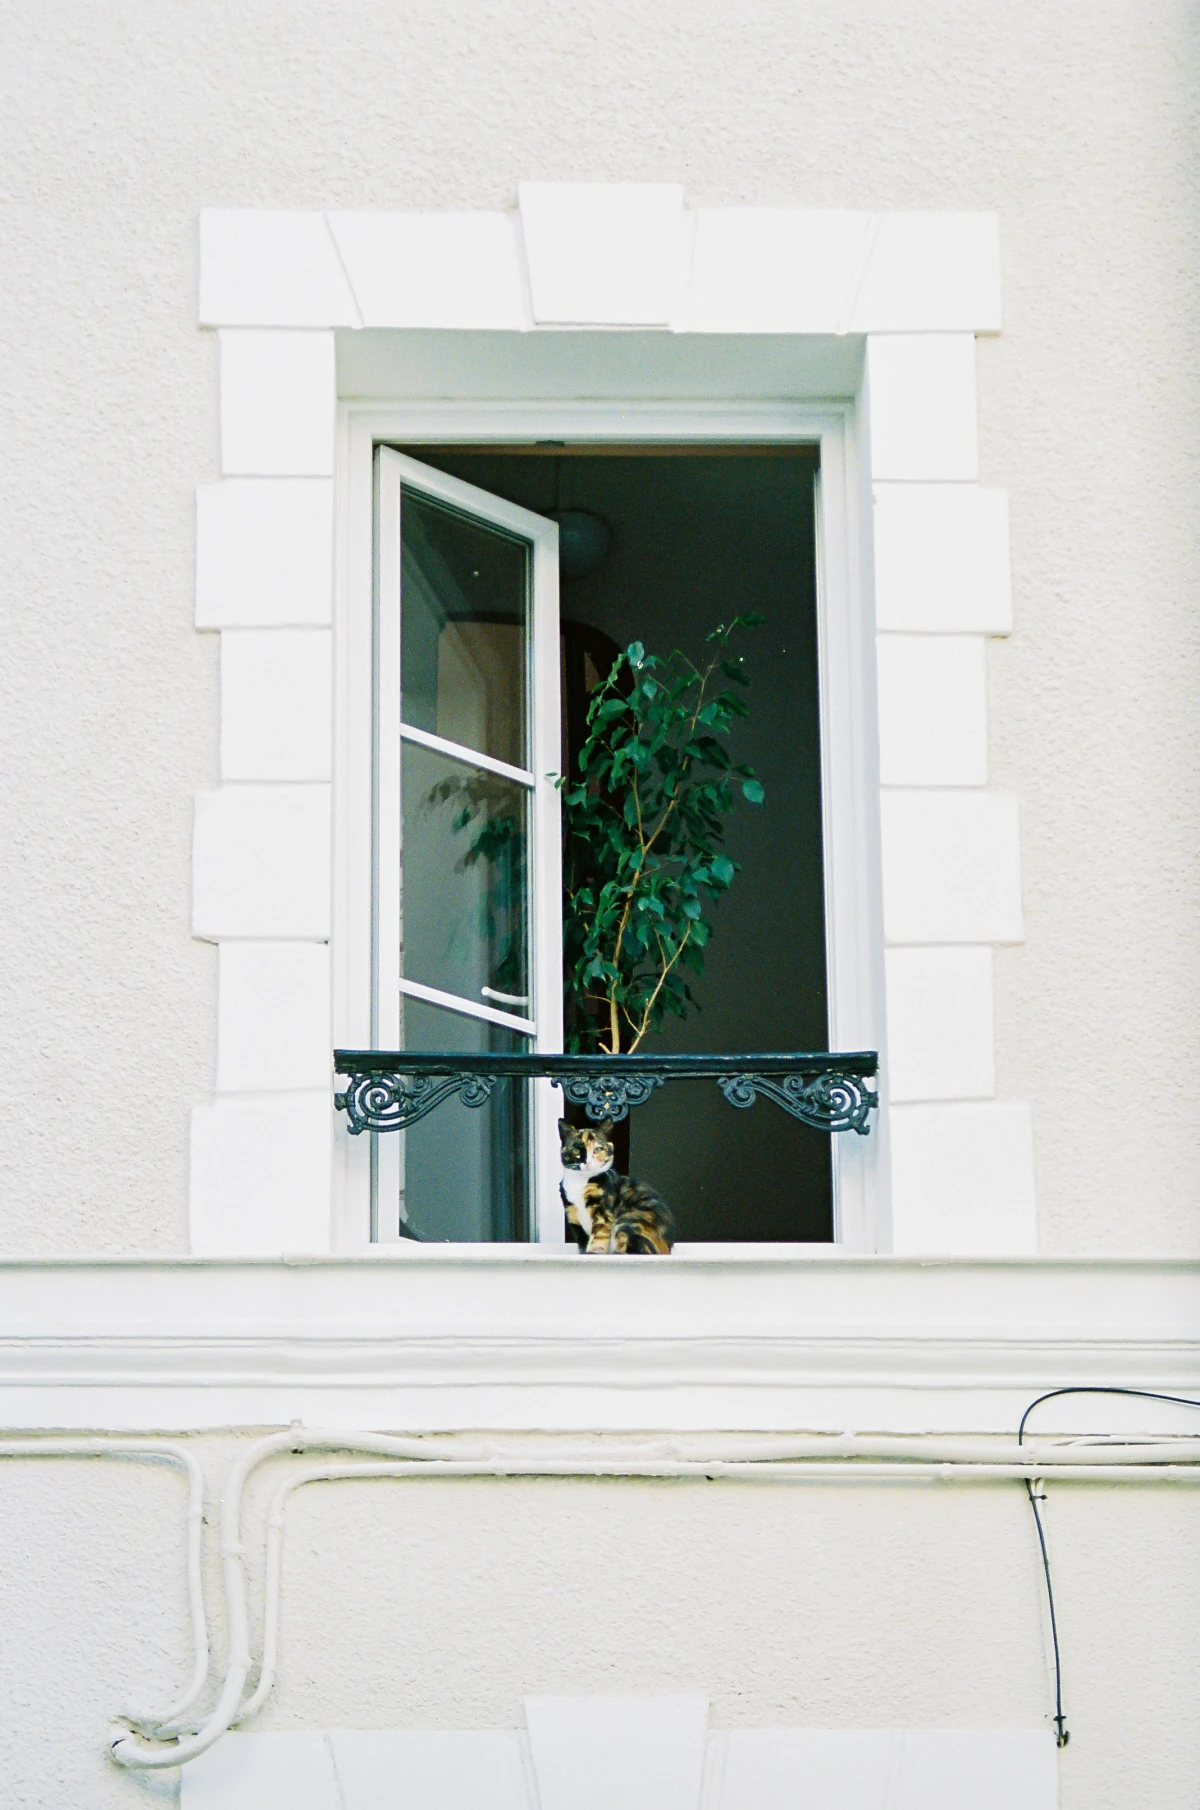 cat on windowsill